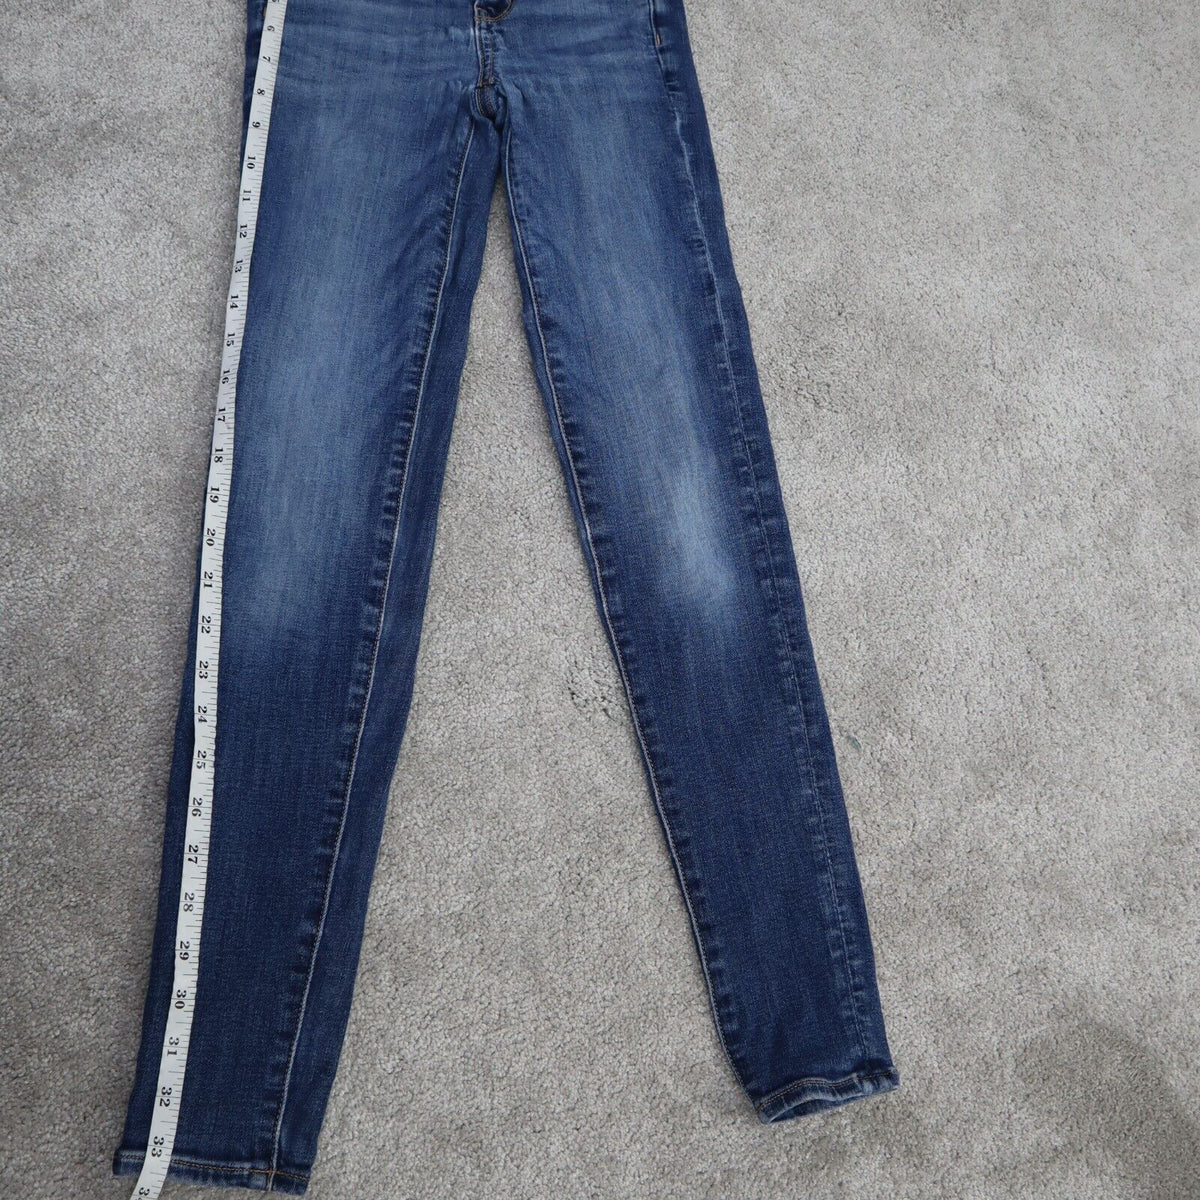 American Eagle teen girls jeans Blue jeans denim jeans long pants size 00